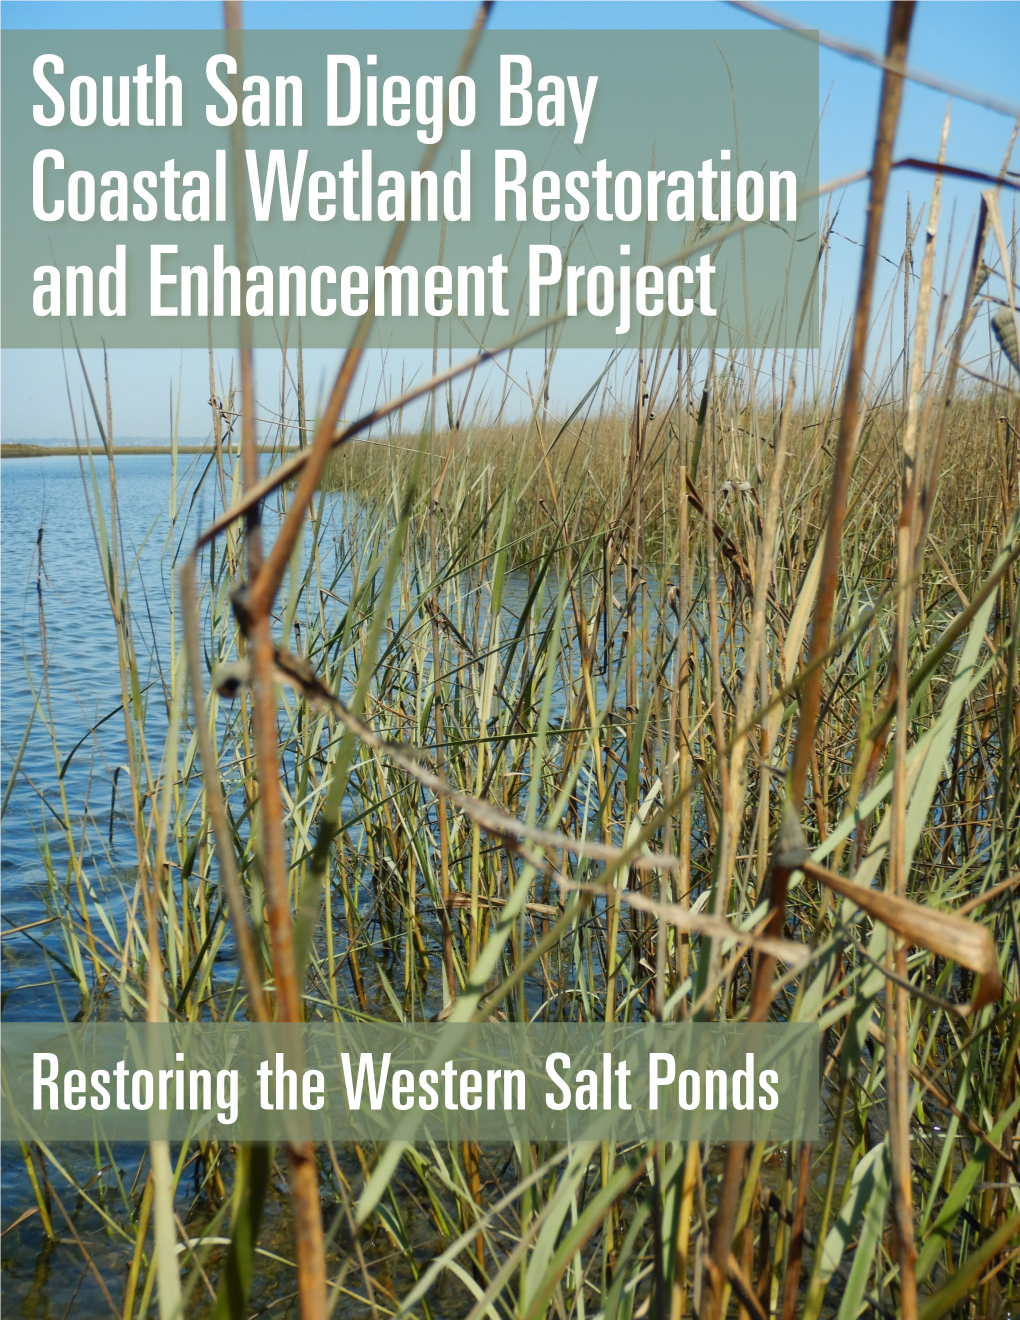 South San Diego Bay Coastal Wetland Restoration and Enhancement Project